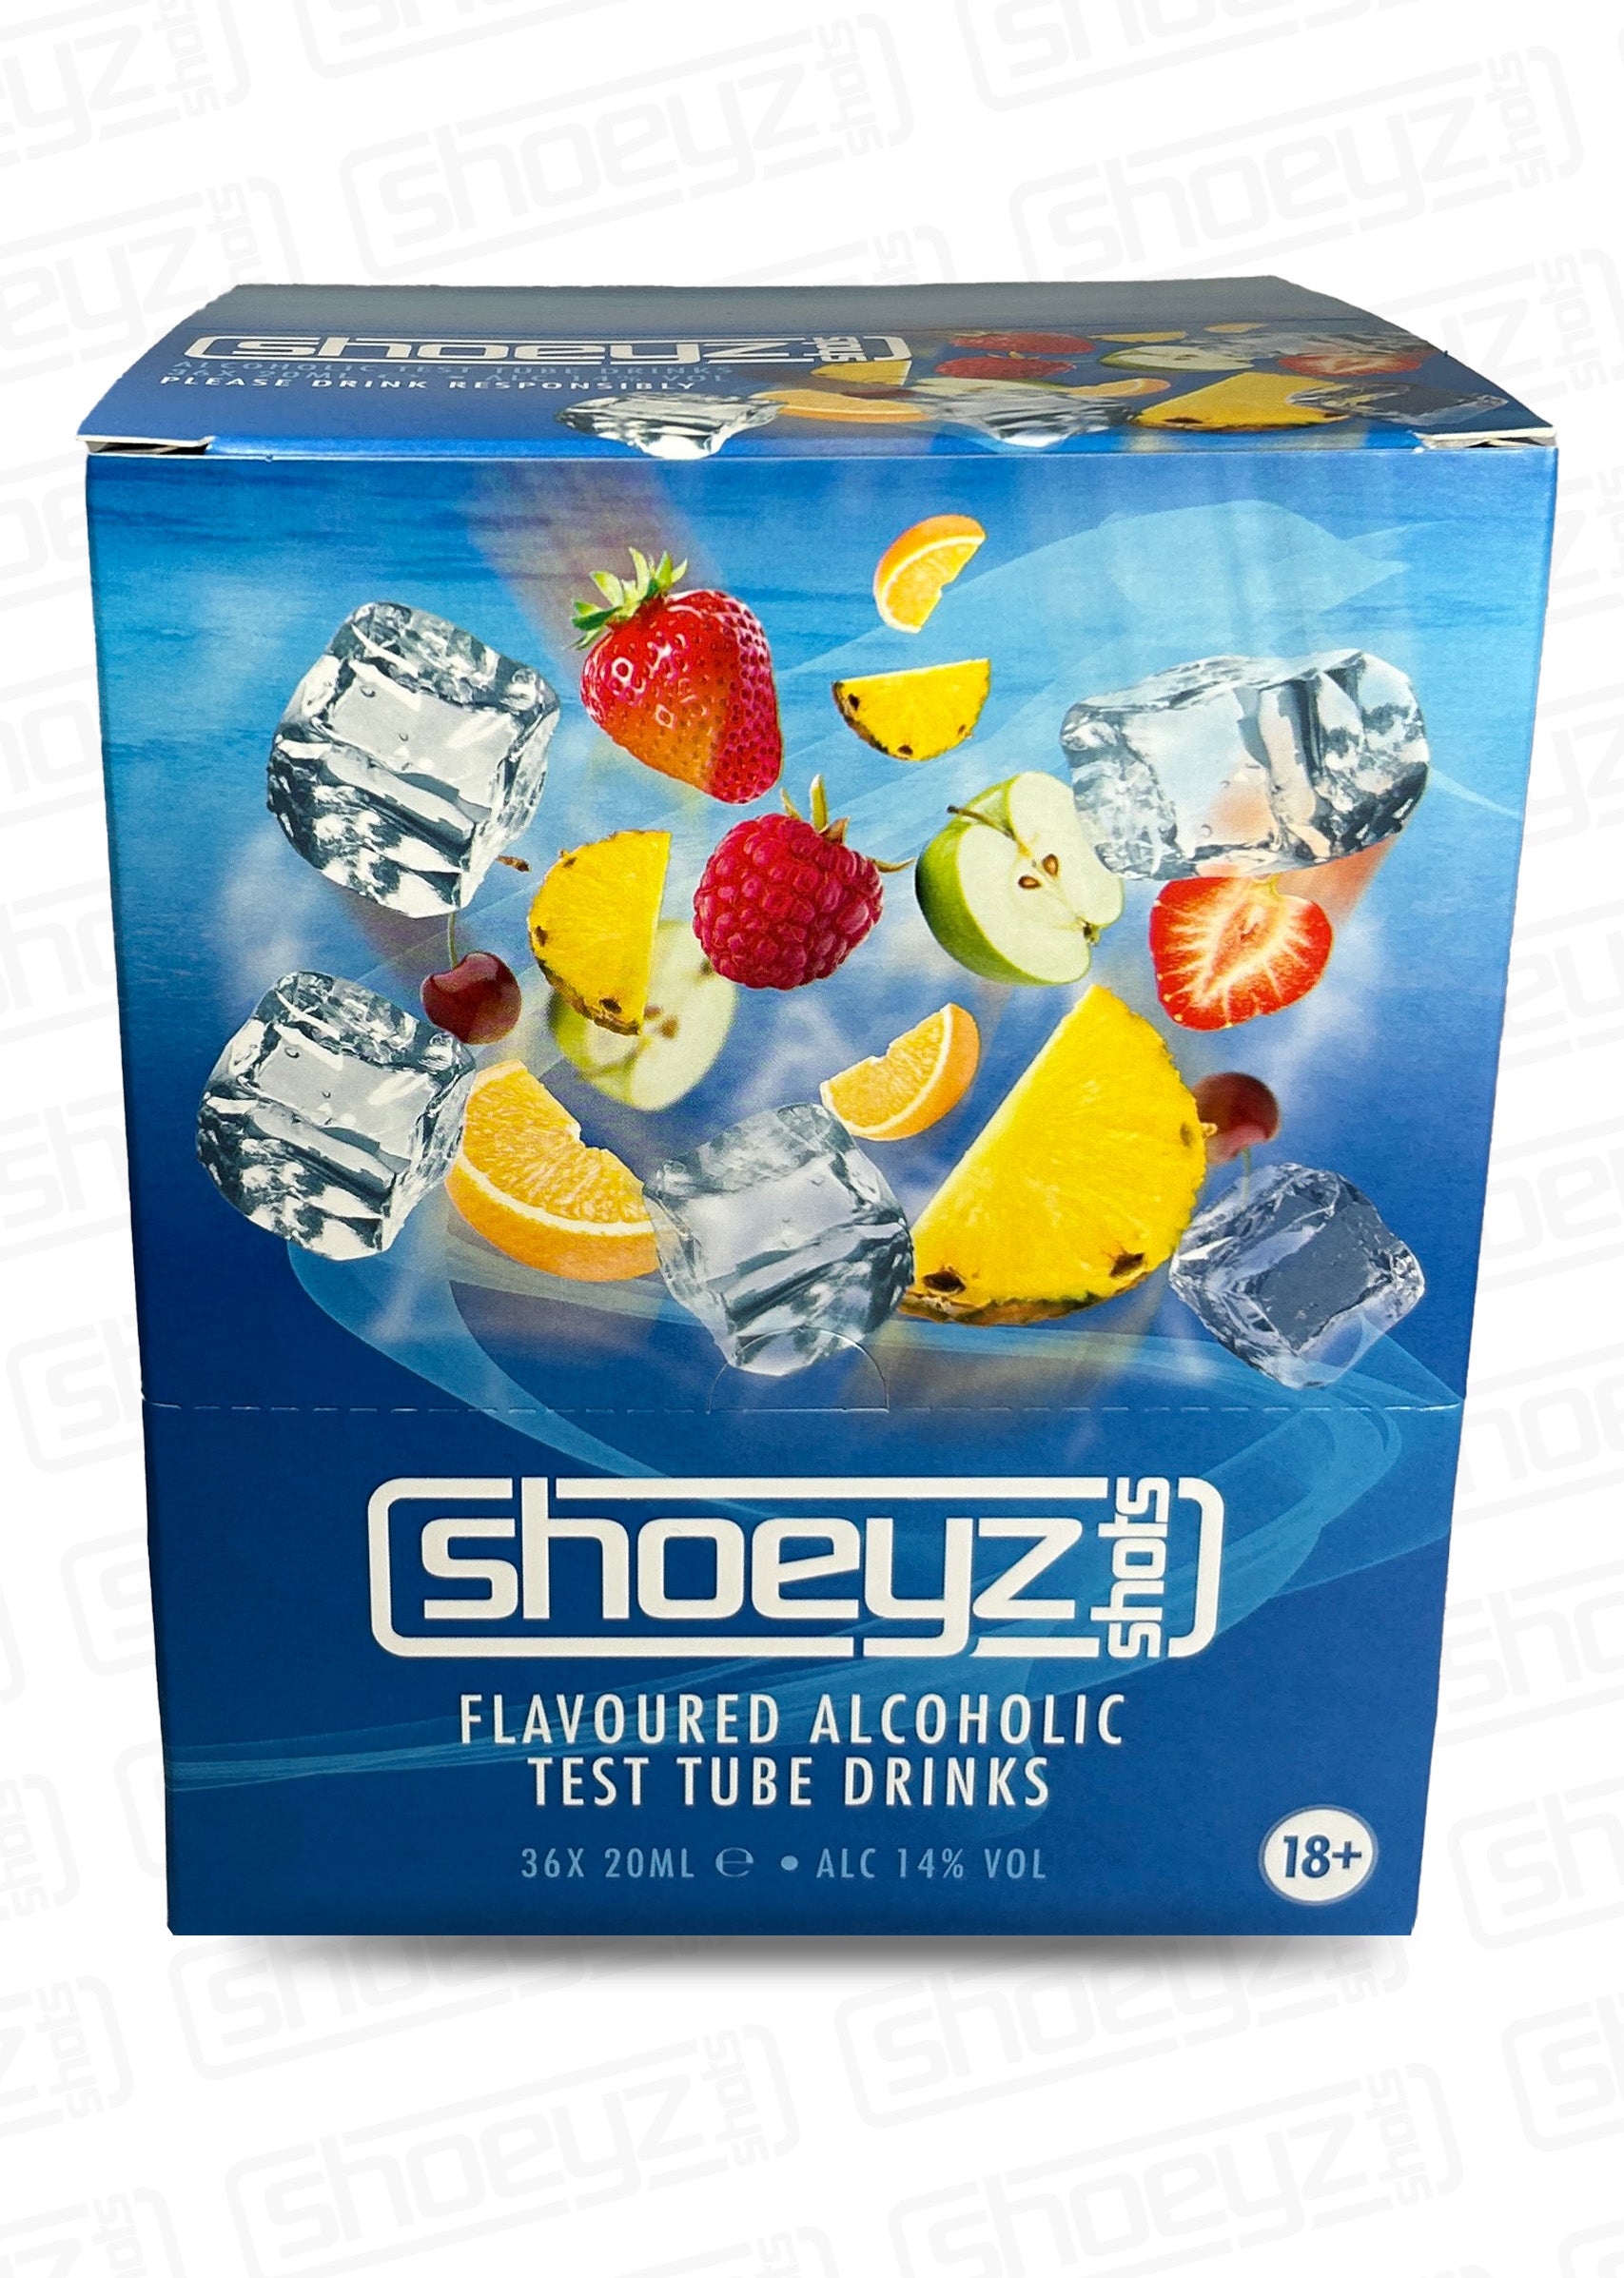 shoeyz vodka test tube shots wild berry rear case